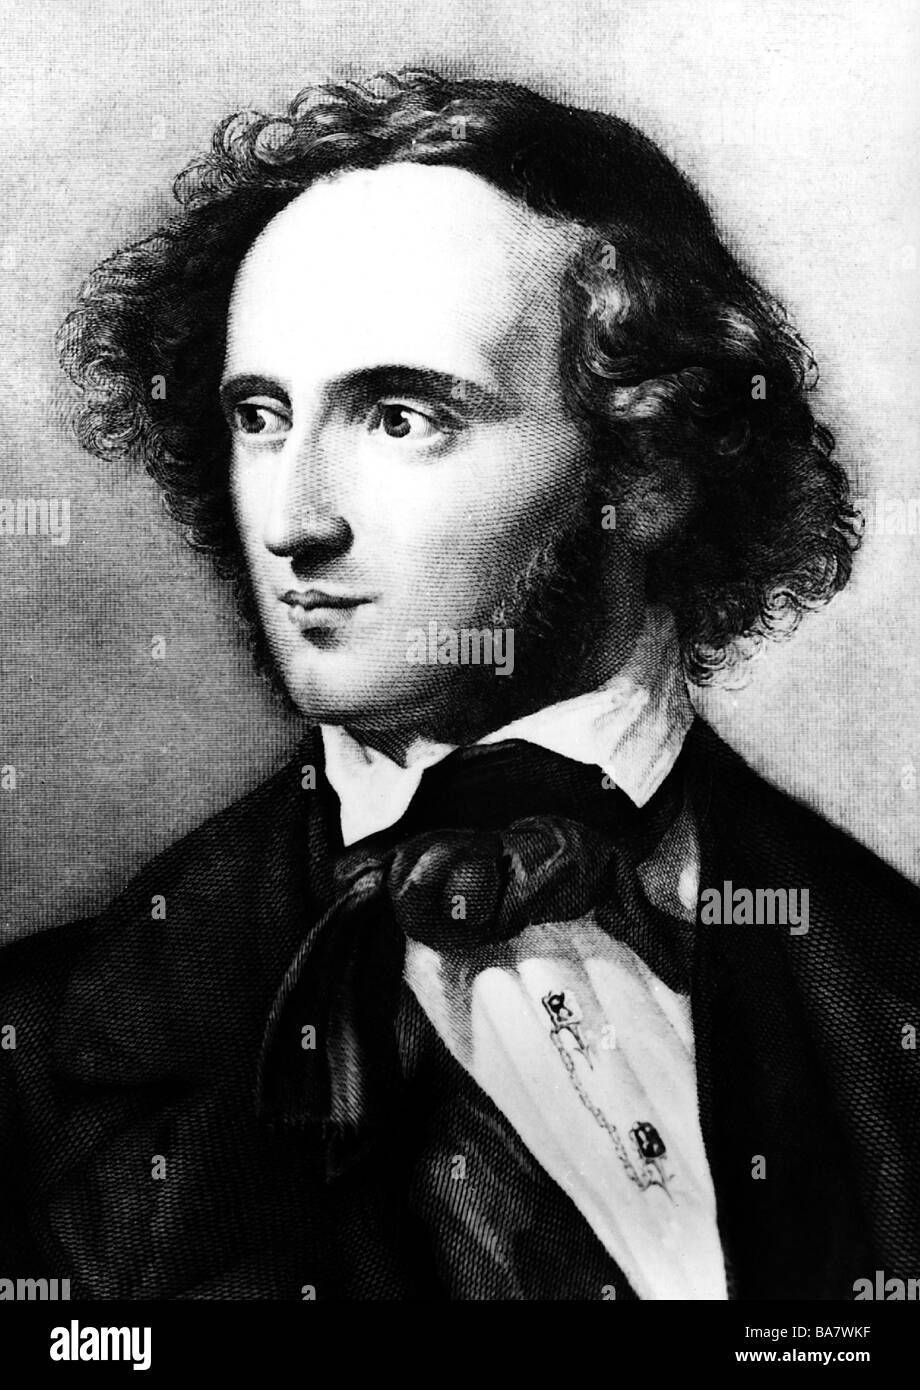 Mendelssohn Bartholdy, Felix 3.2.1809 - 4.11.1847, German musician (composer), portrait, engraving by J. Caspar after painting by W. Hensel, 19th century, Stock Photo